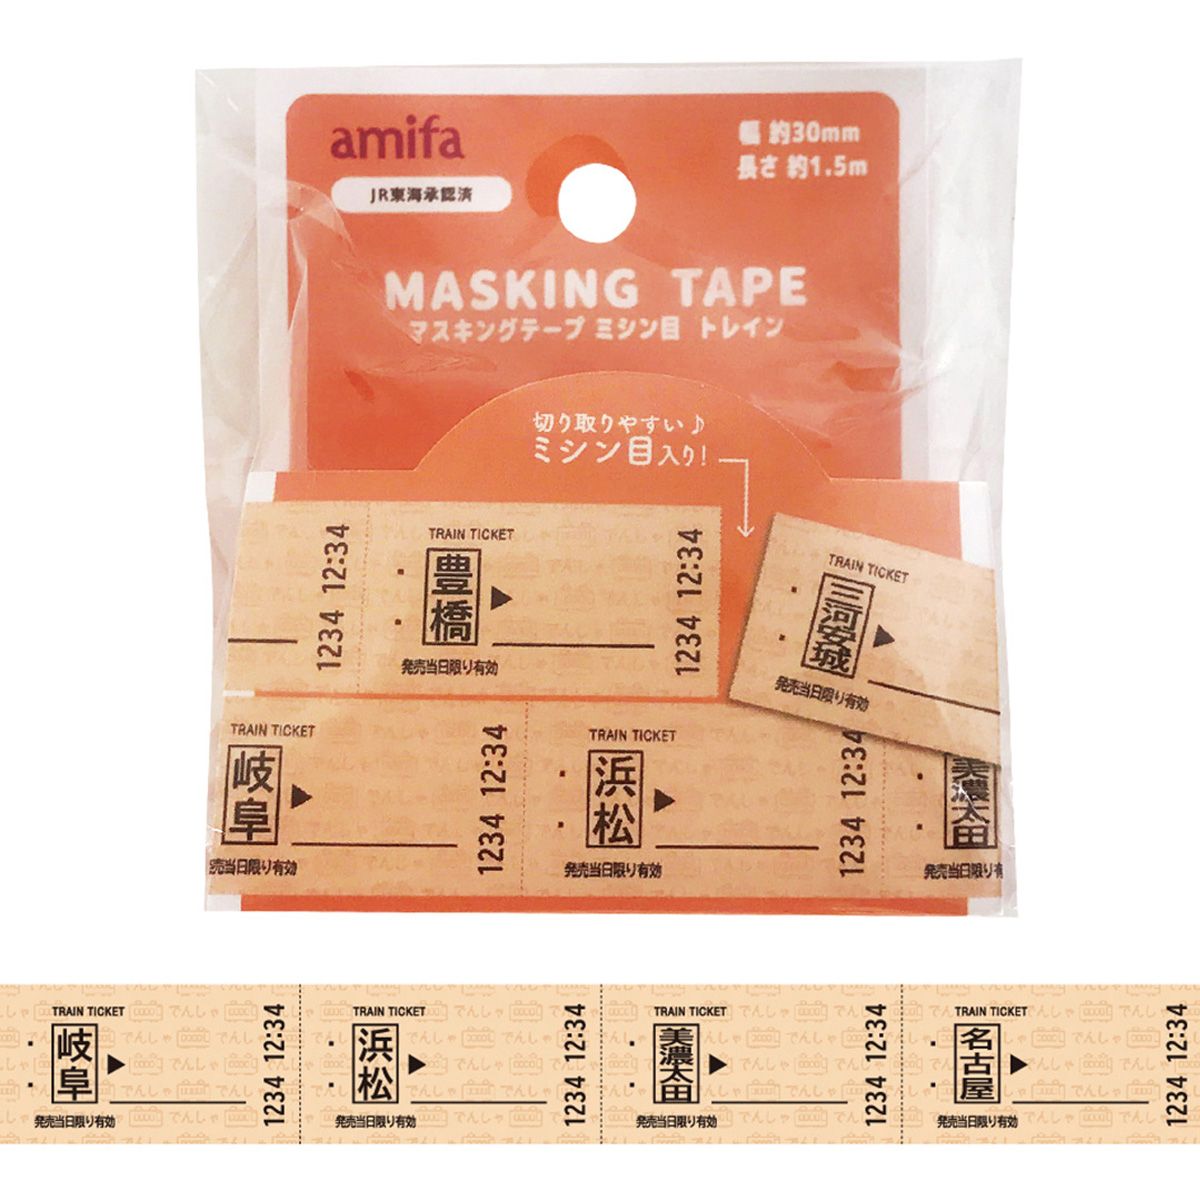 【OUTLET】マスキングテープ 30mm×1.5m ミシン目 トレイン 351457